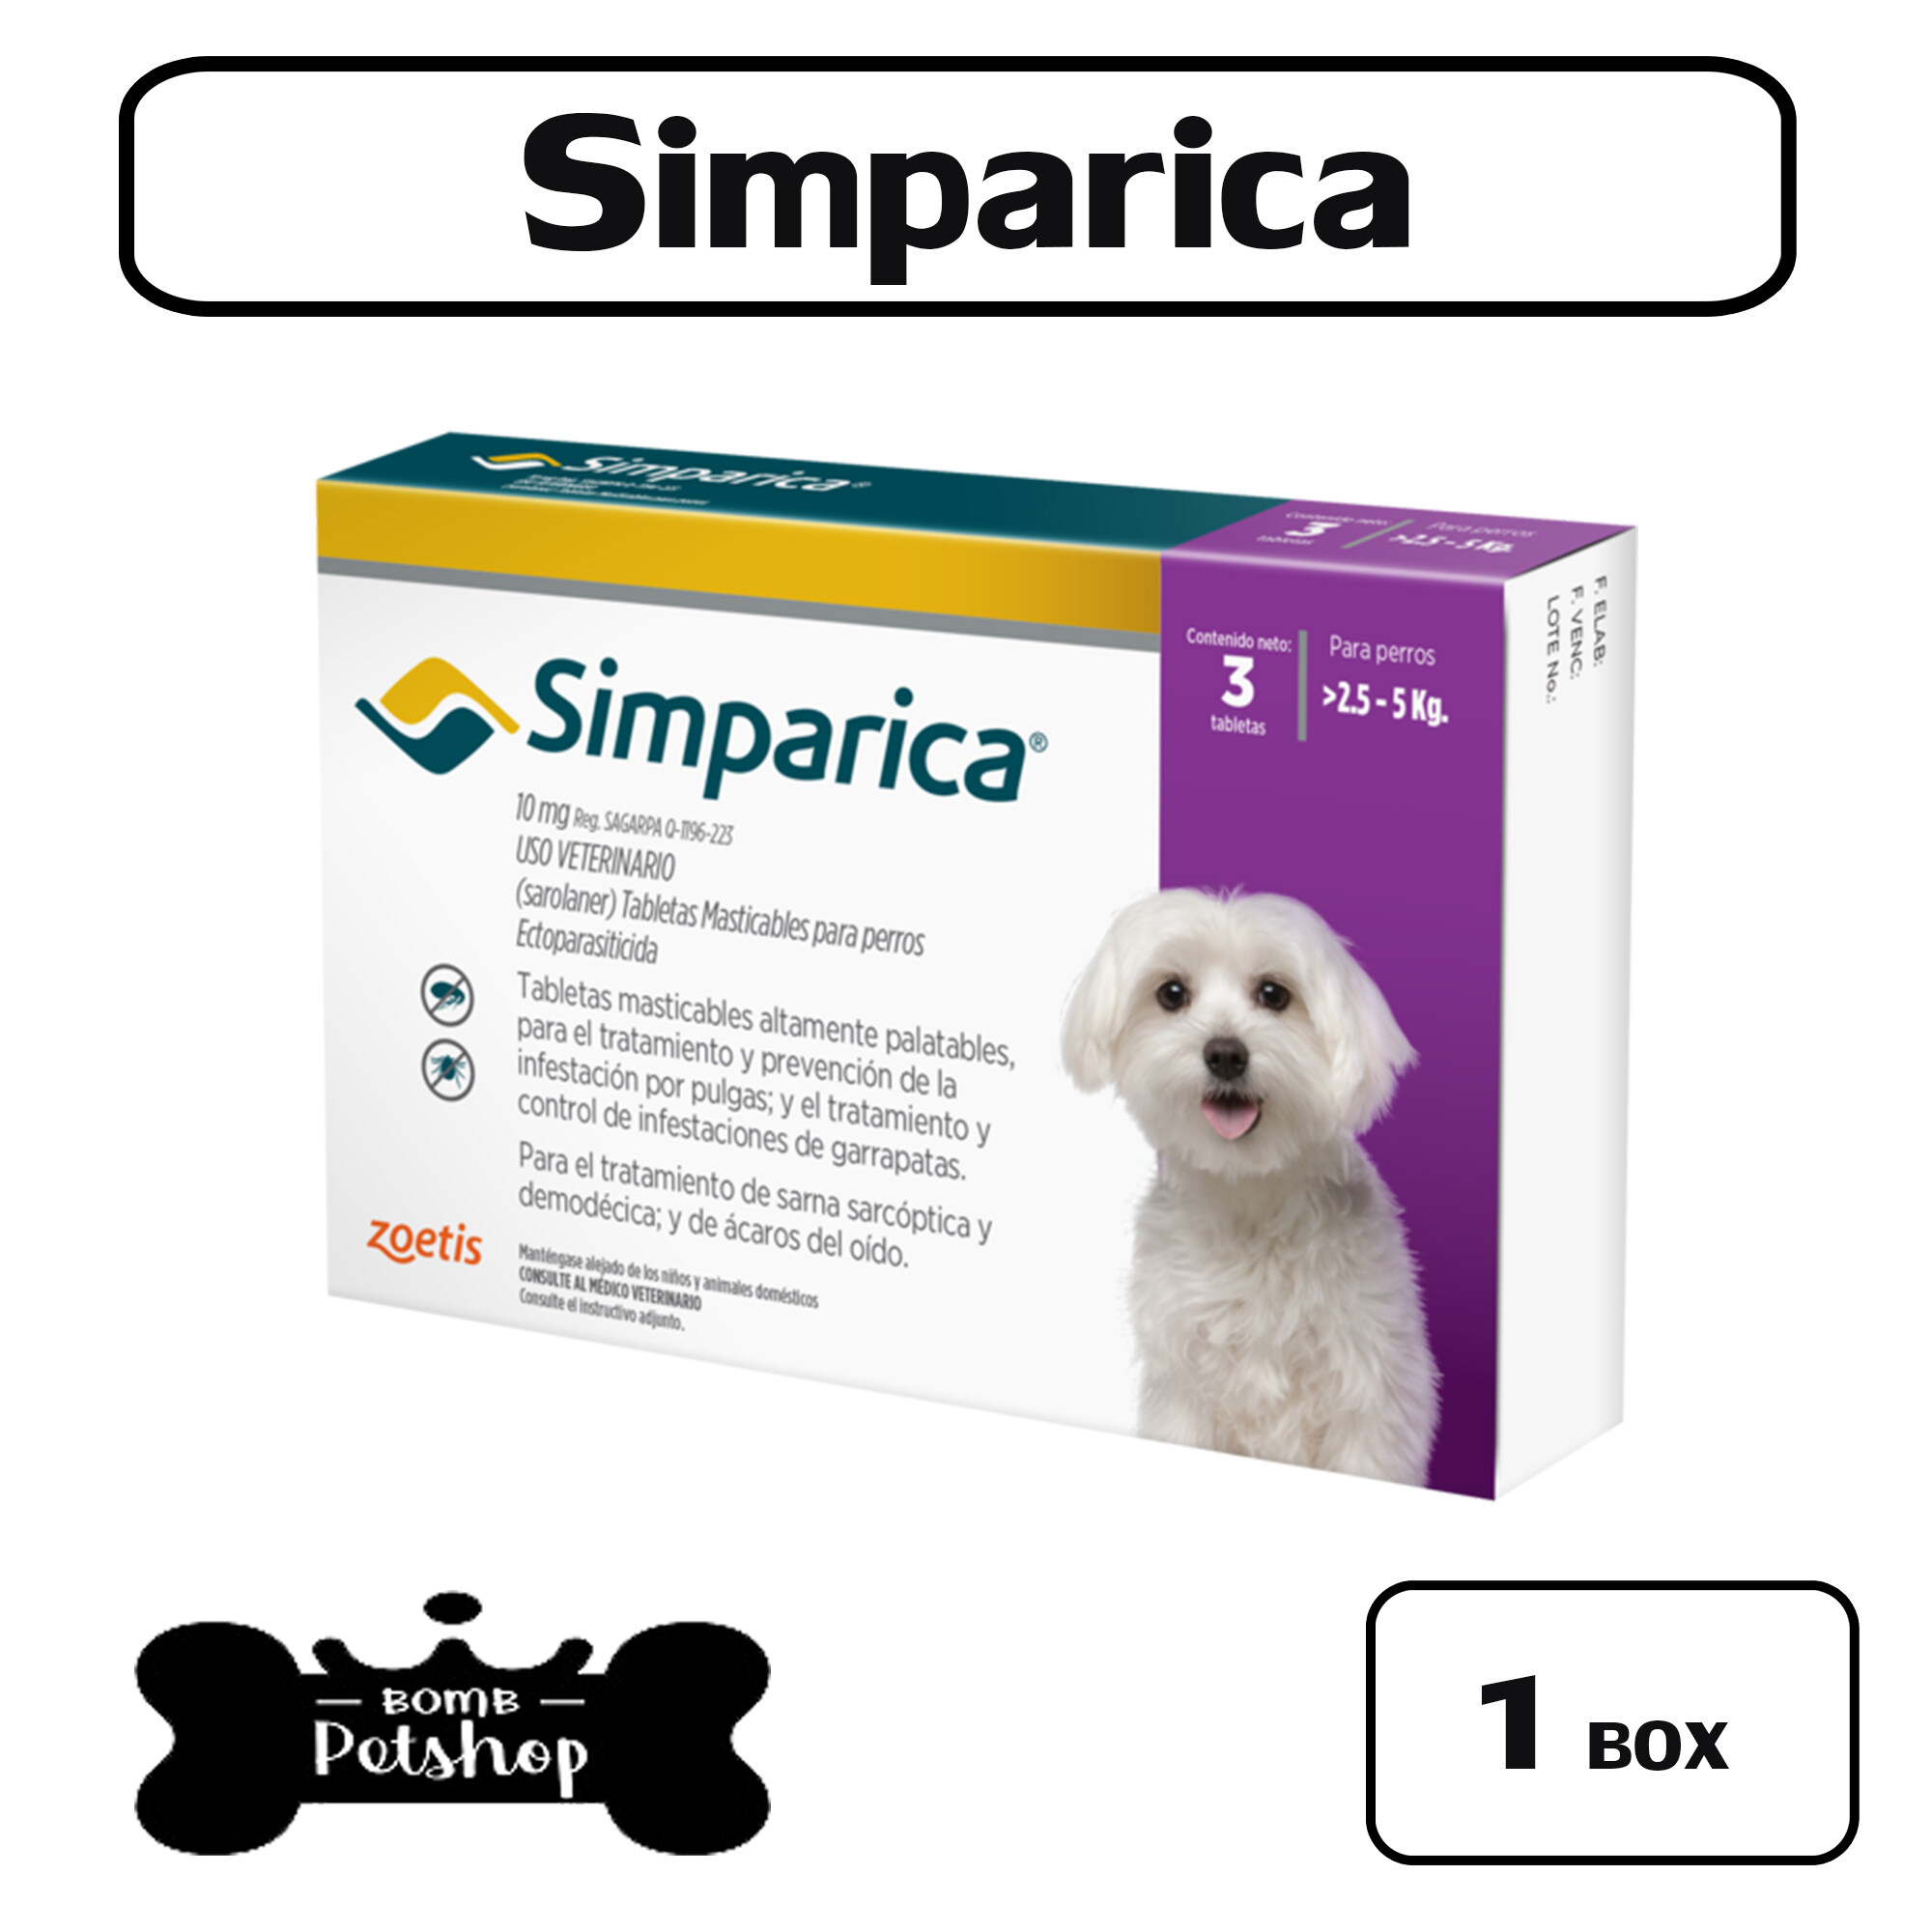 Simparica ยาป้องกัน เห็บ หมัด สำหรับสุนัข 2.5 - 5.0 kg 1 กล่อง บรรจุ 3 เม็ด